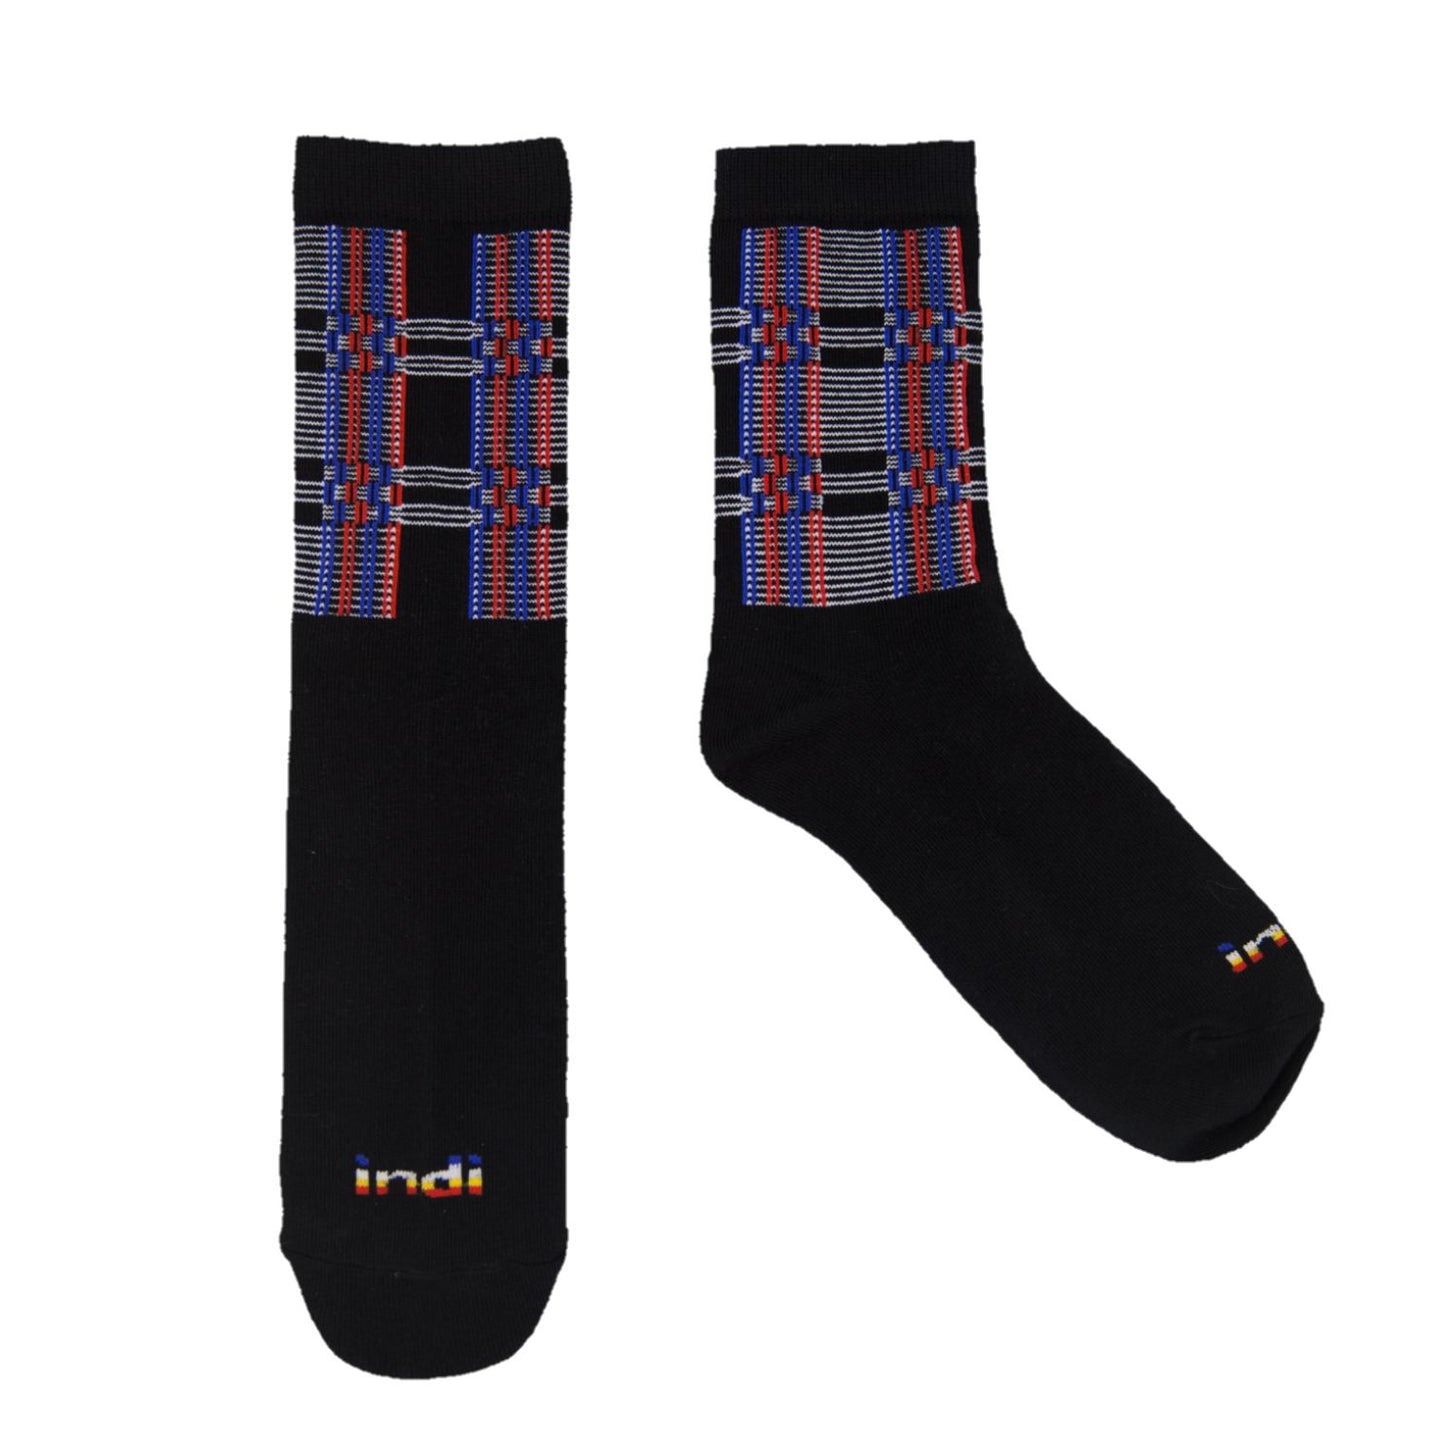 Binakul (Talaw) - INDI Heritage Socks (Adult)